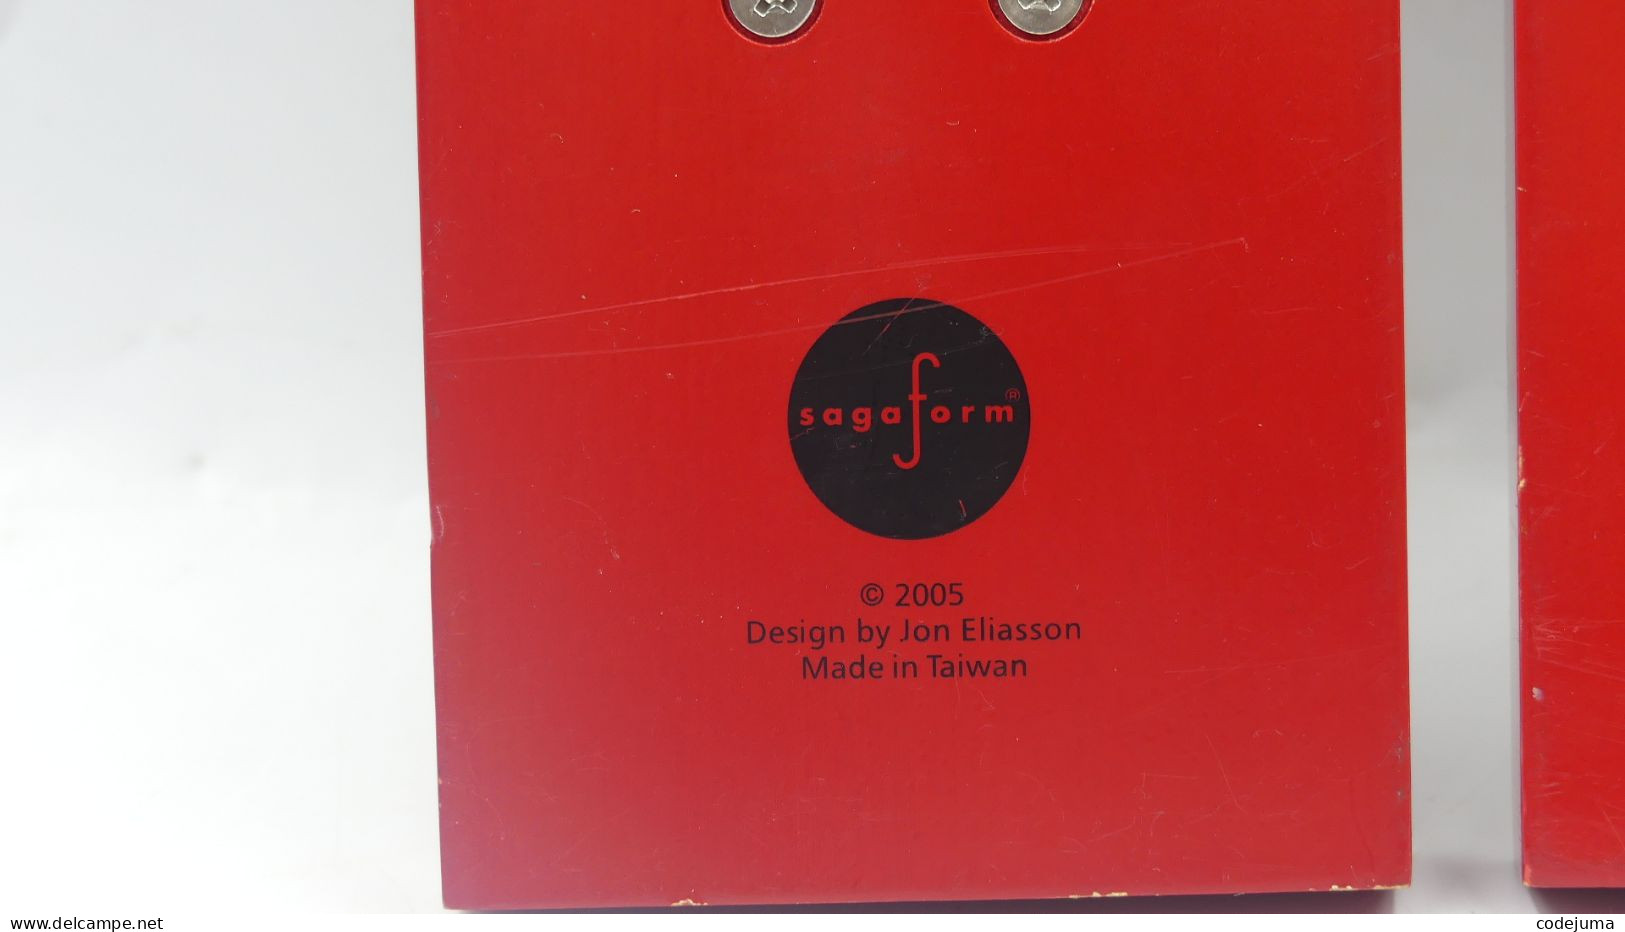 Sagaform - Paire de bougeoir d'applique (2) Jon Eliasson